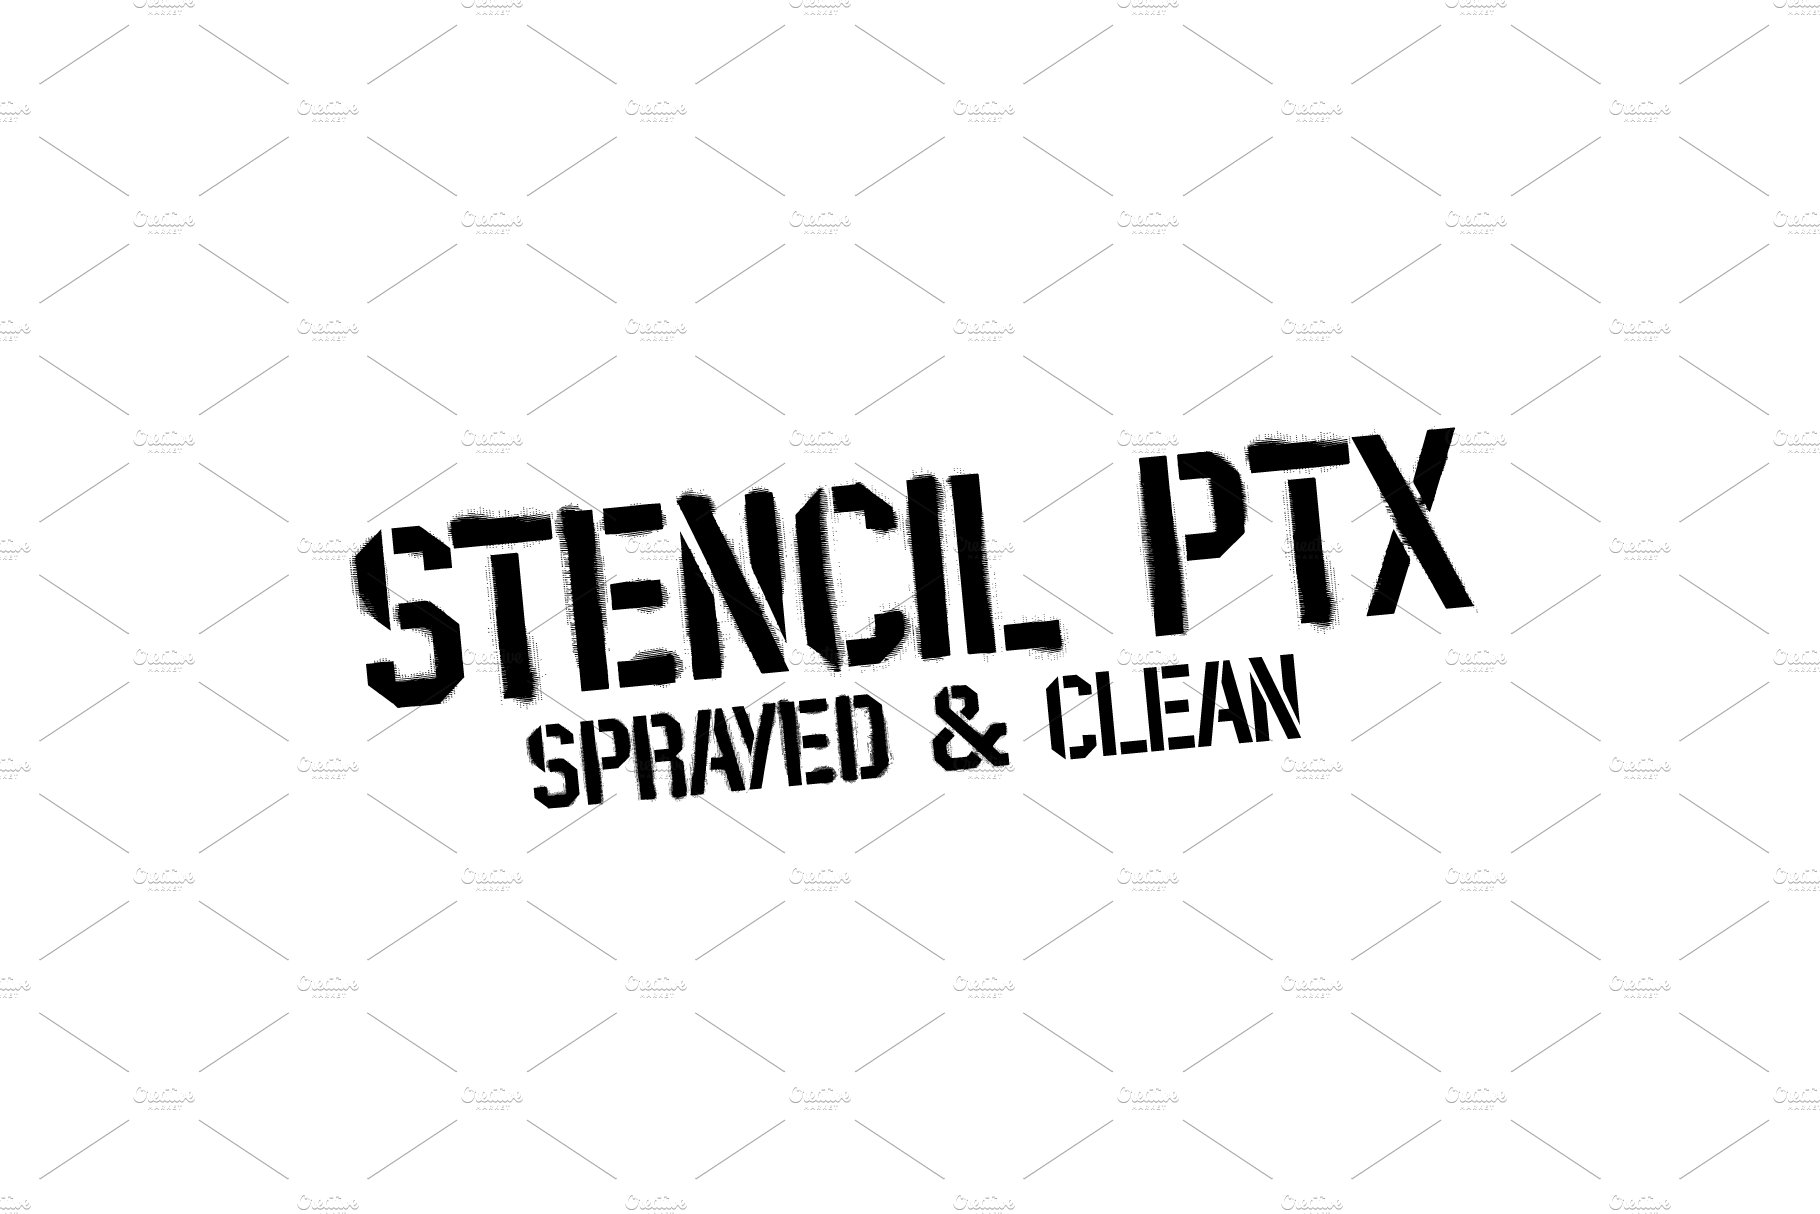 Stencil PTx font family cover image.